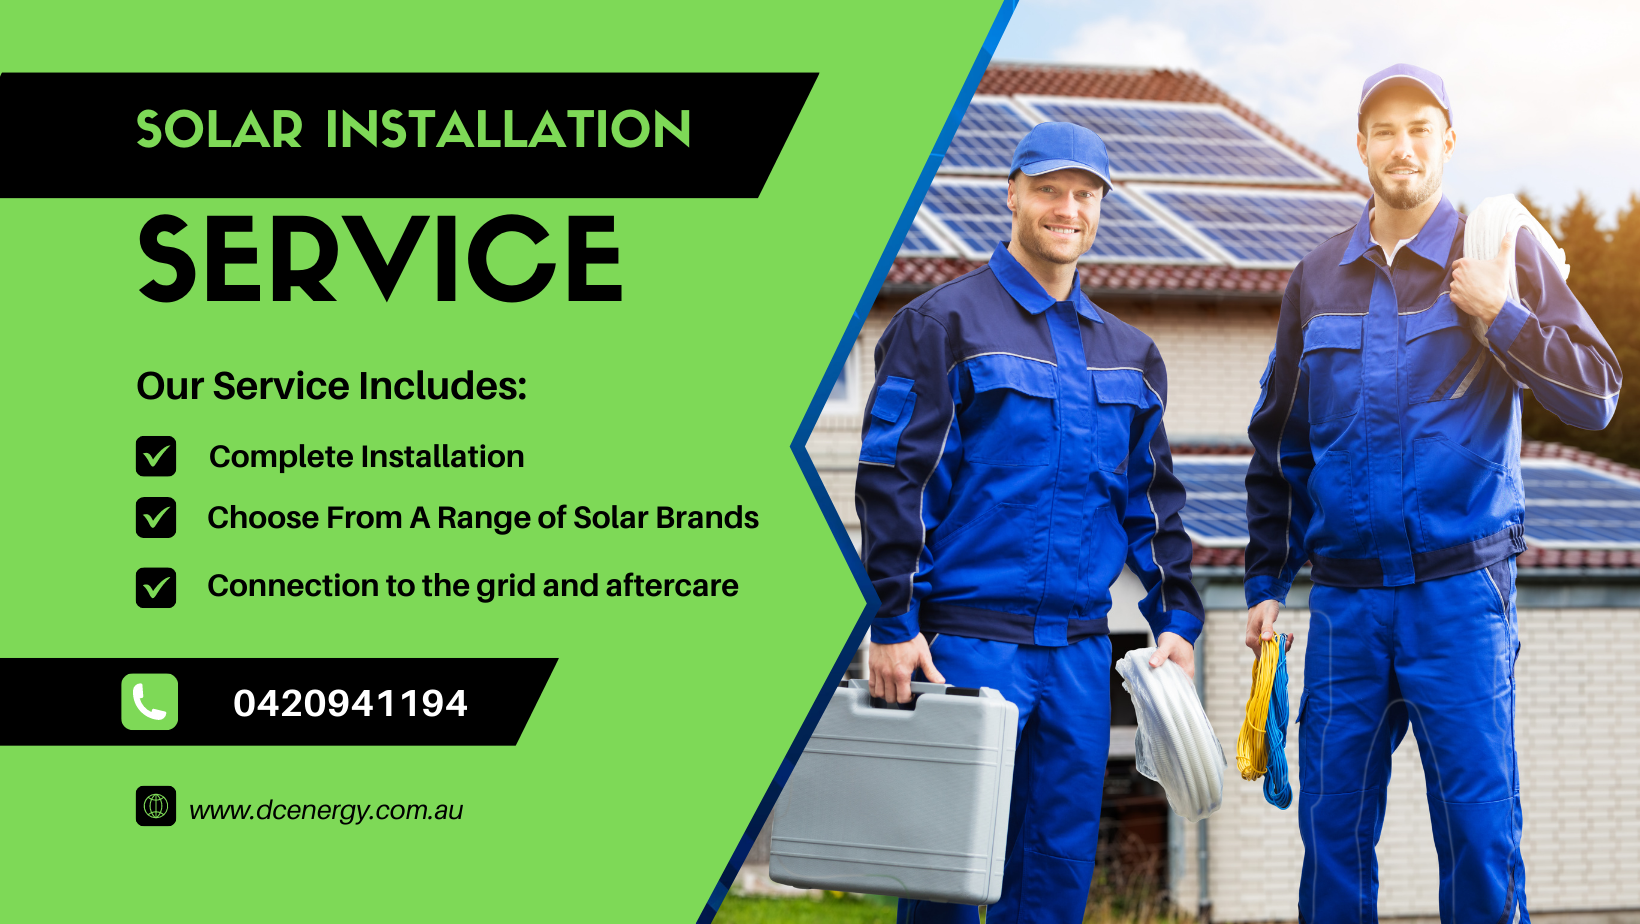 About DC Energy Solar installer service Sydney website header